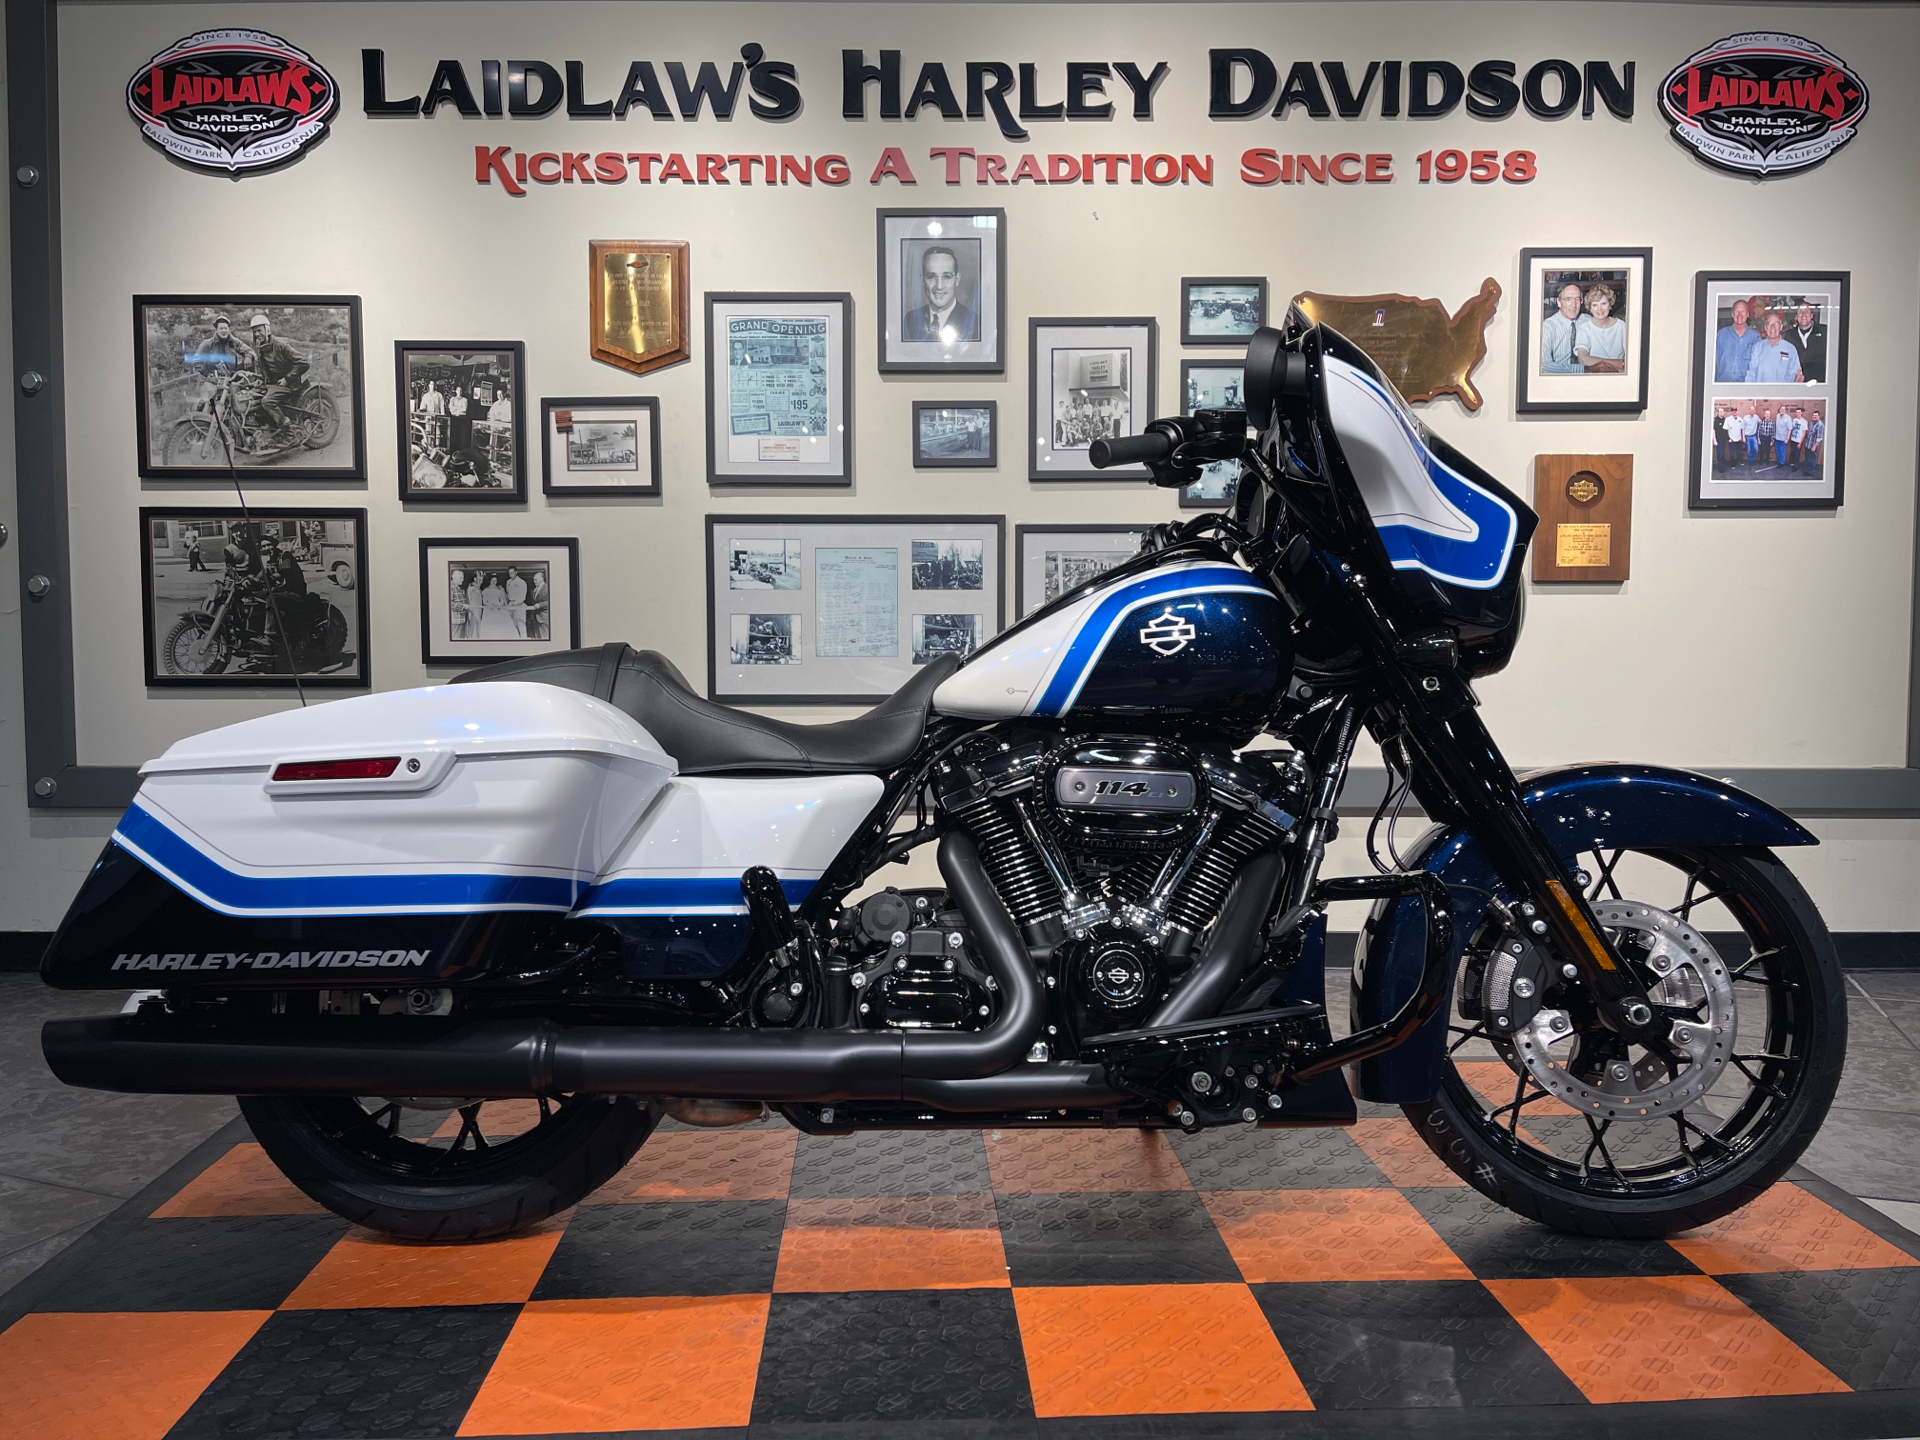 New 2021 Harley Davidson Street Glide Special Arctic Blast Black Pearl Option Baldwin Park Ca 29471